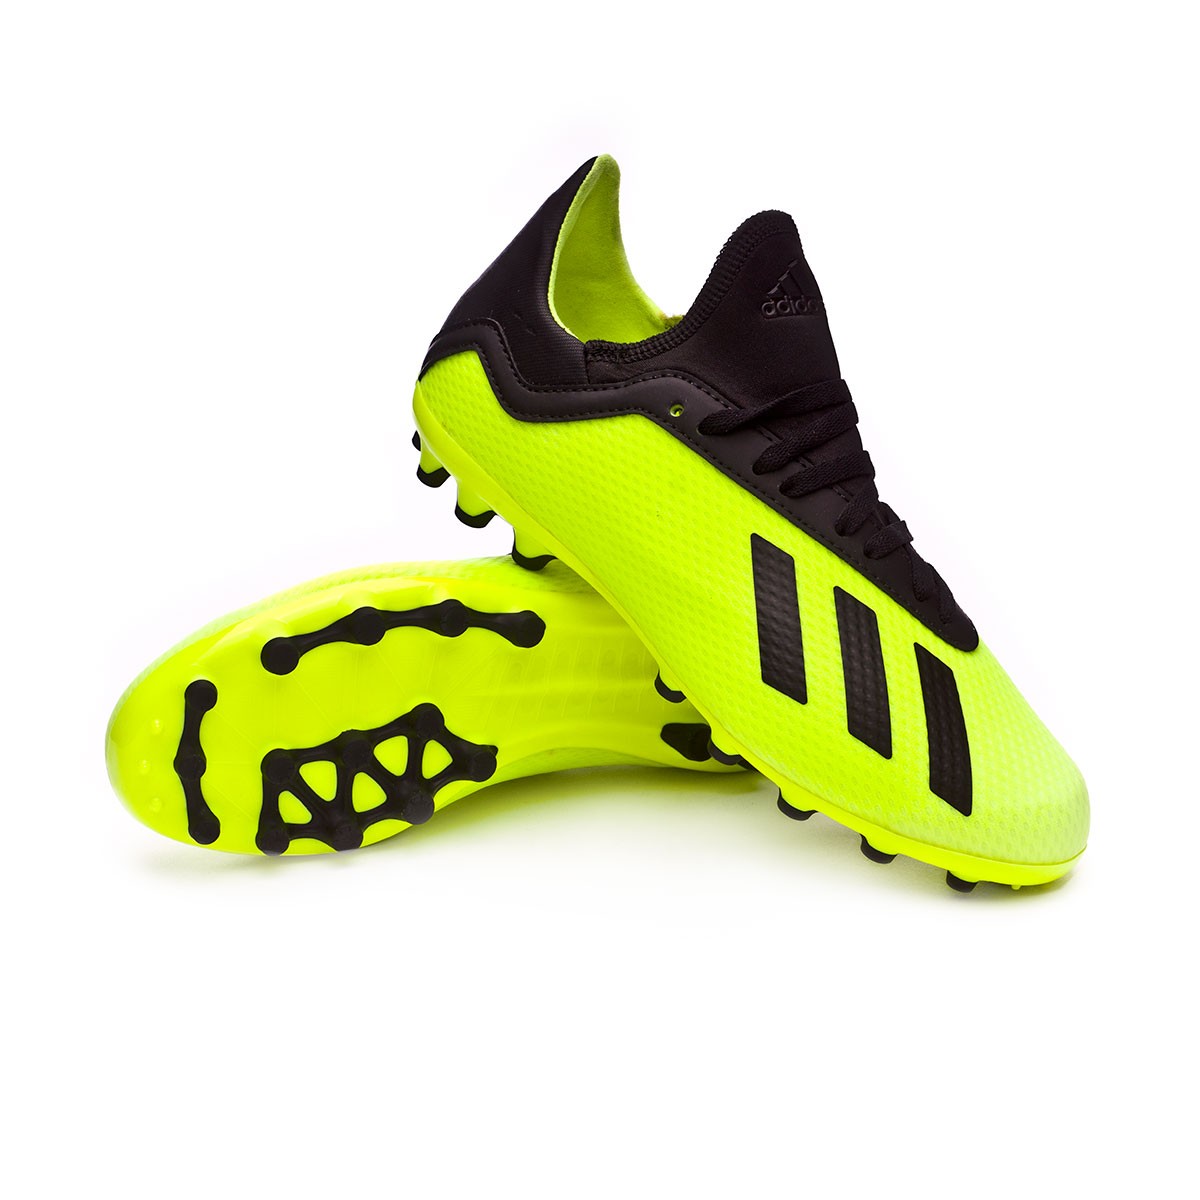 Football Boots adidas Kids X 18.3 AG Solar yellow-Core black-Solar yellow -  Football store Fútbol Emotion